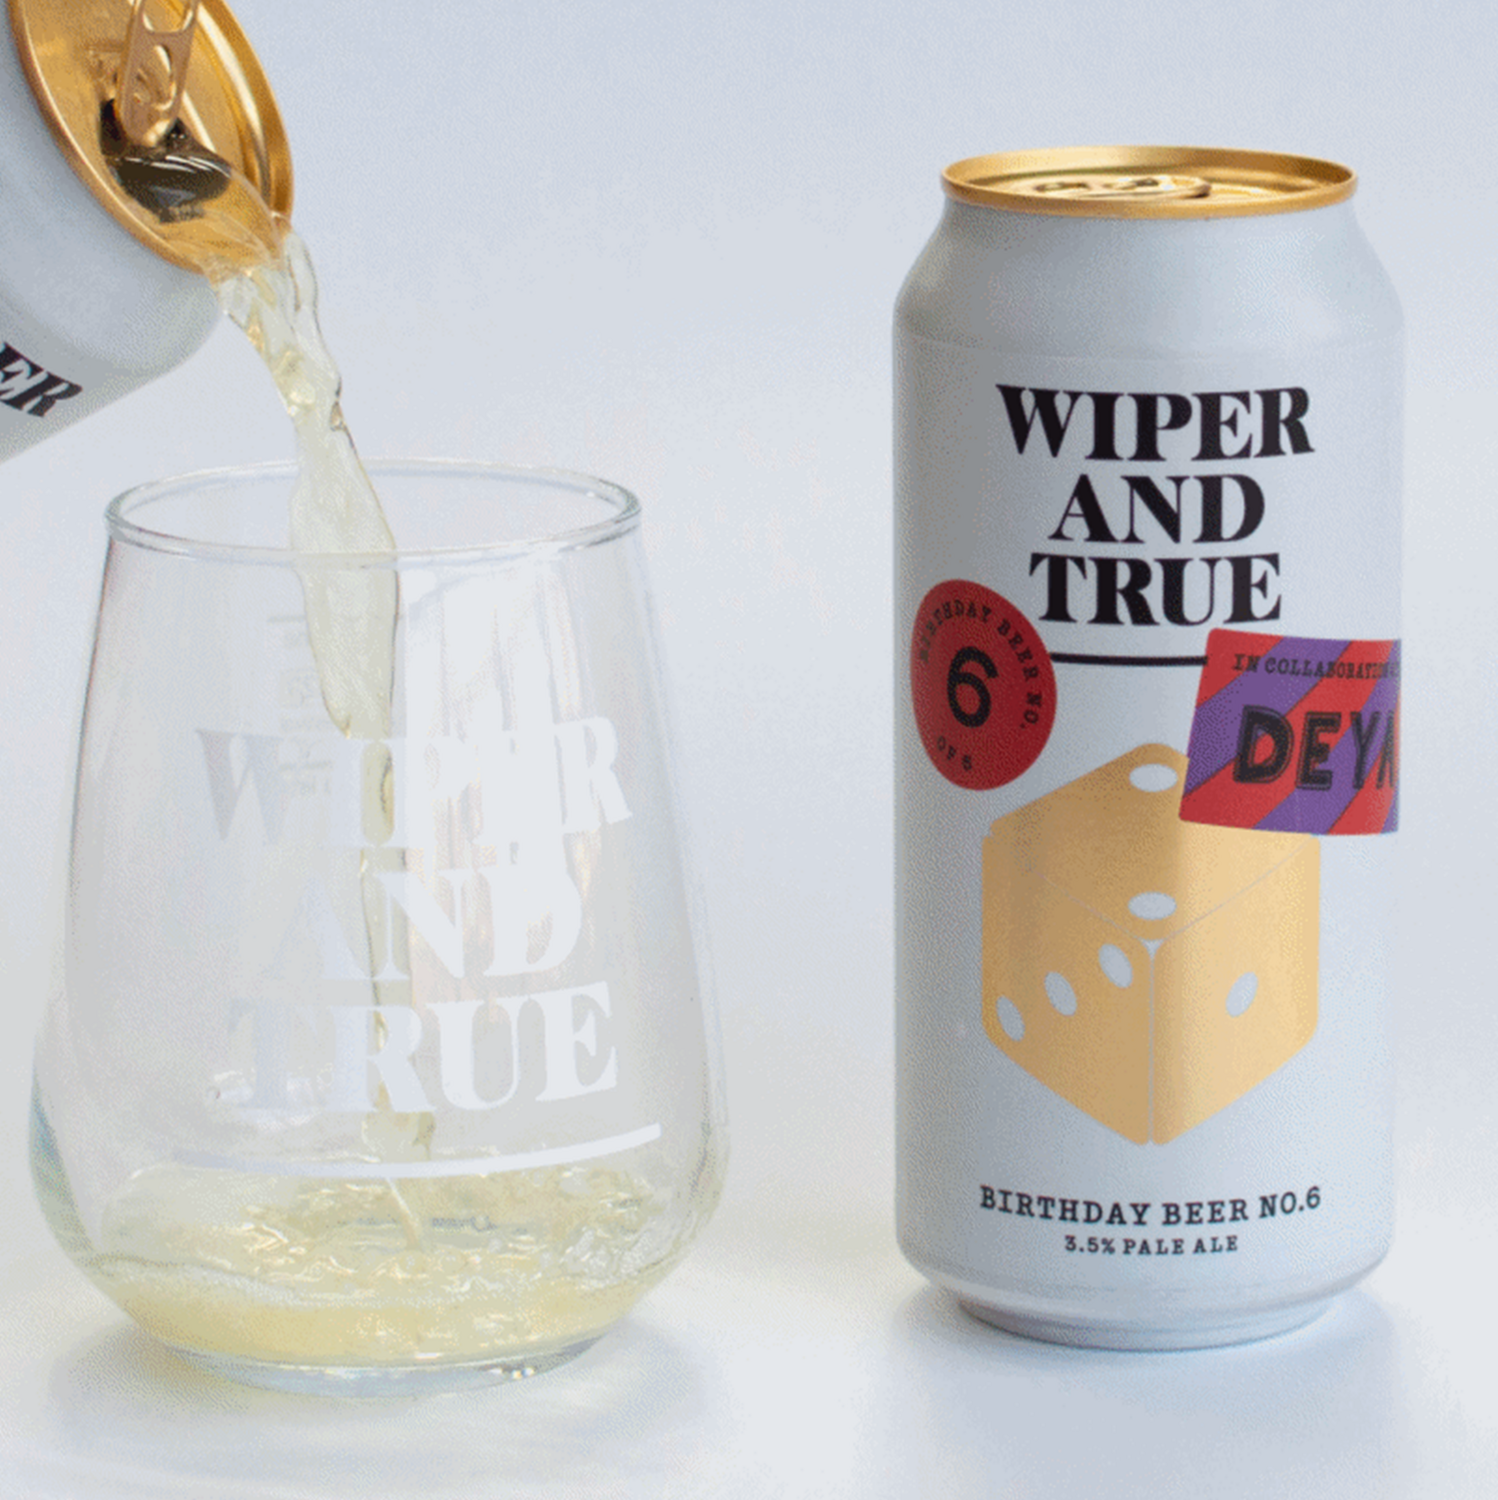 Wiper & True x Deya Birthday Beer No.6 Pale Ale